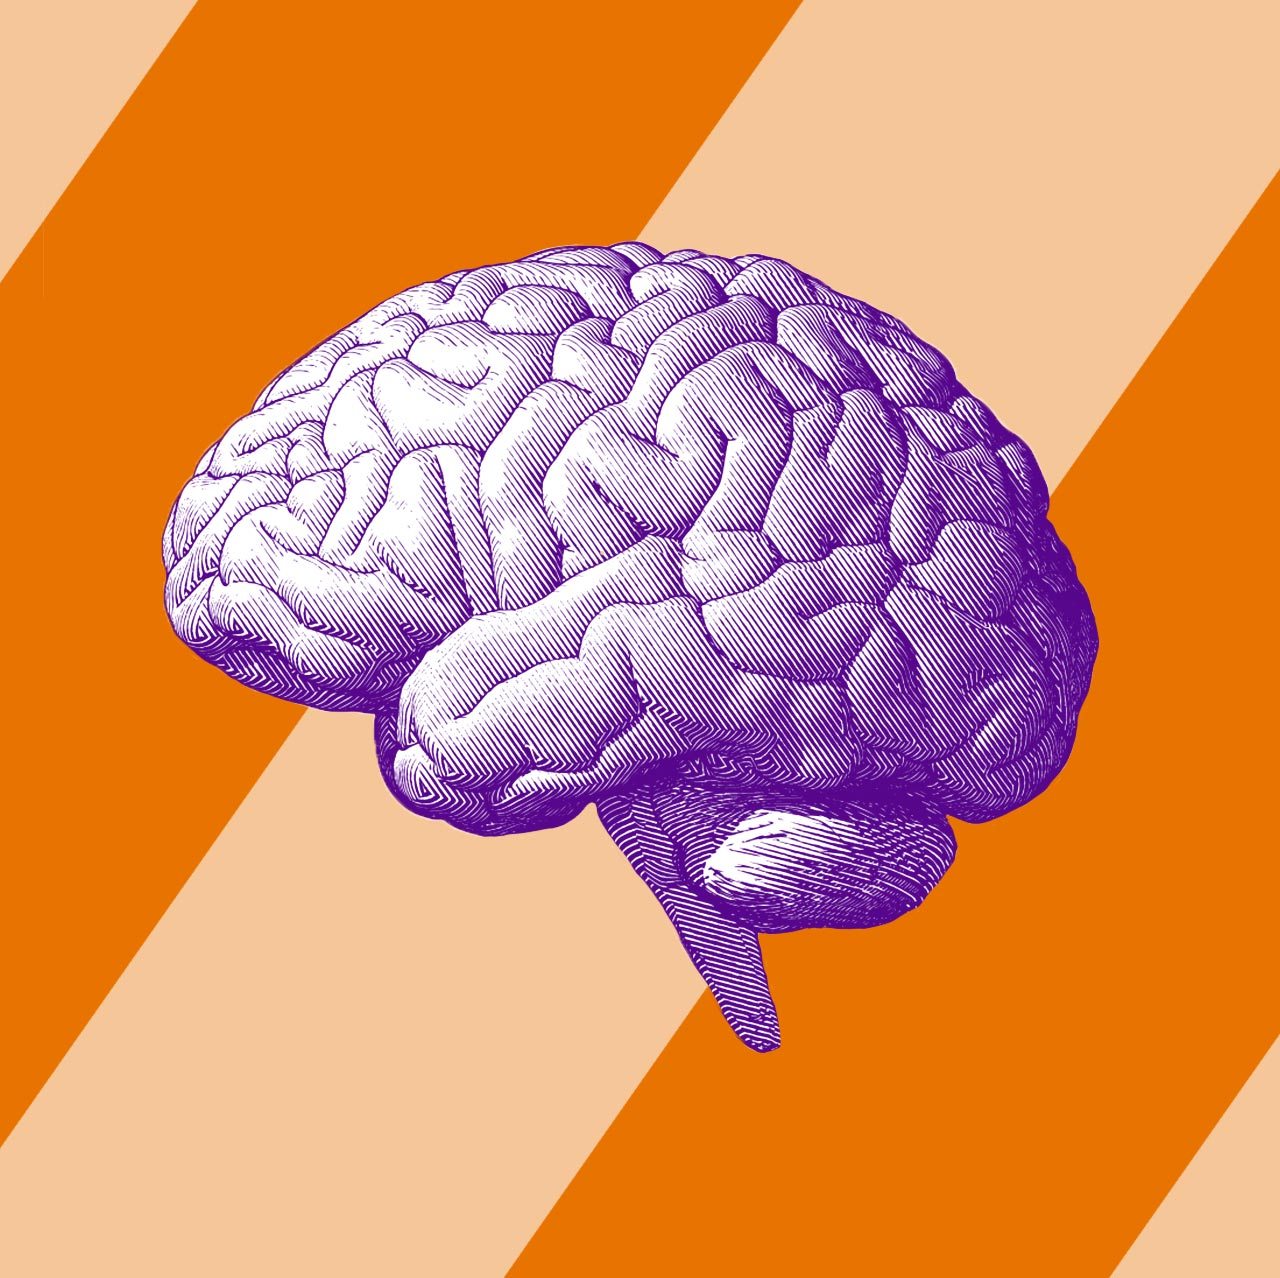 Photo of a human brain.